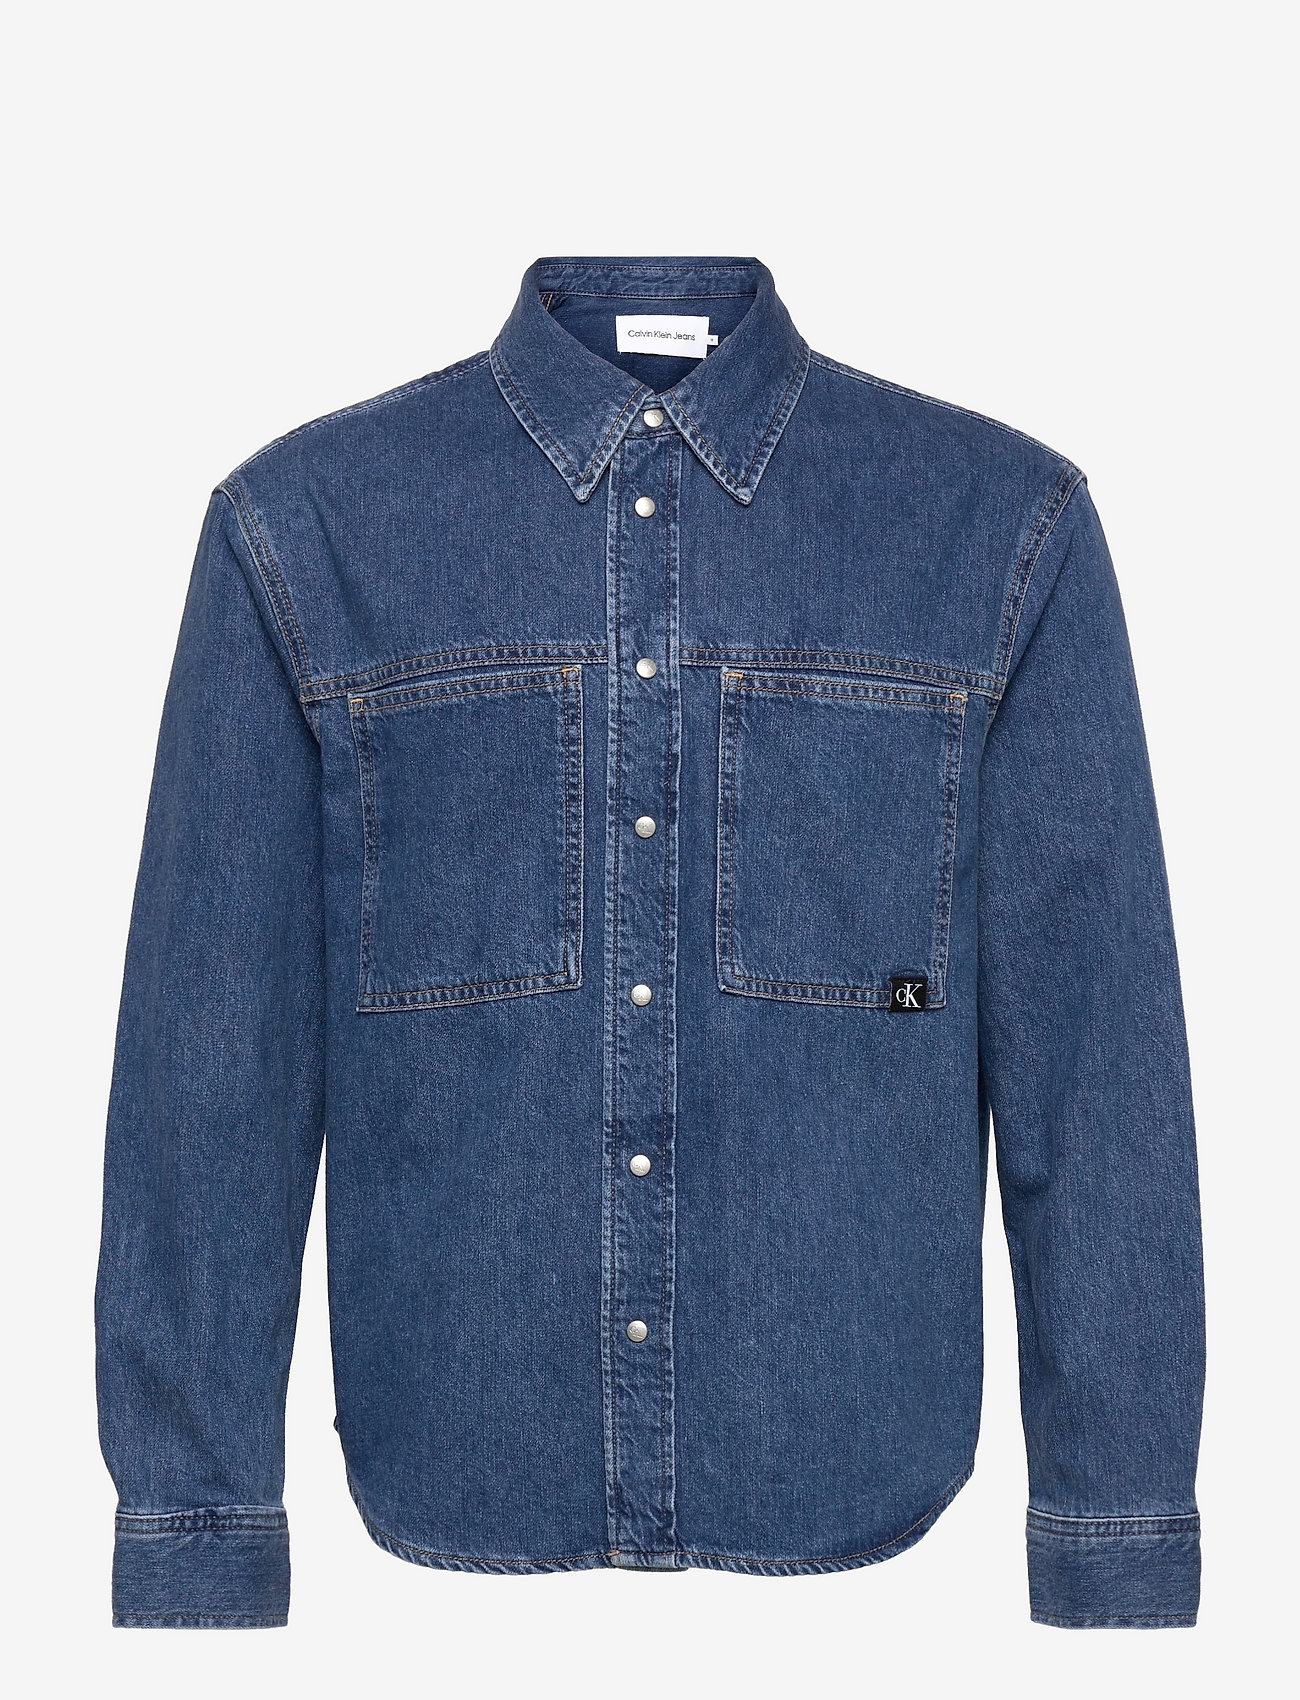 Introducir 72+ imagen calvin klein jeans blouse